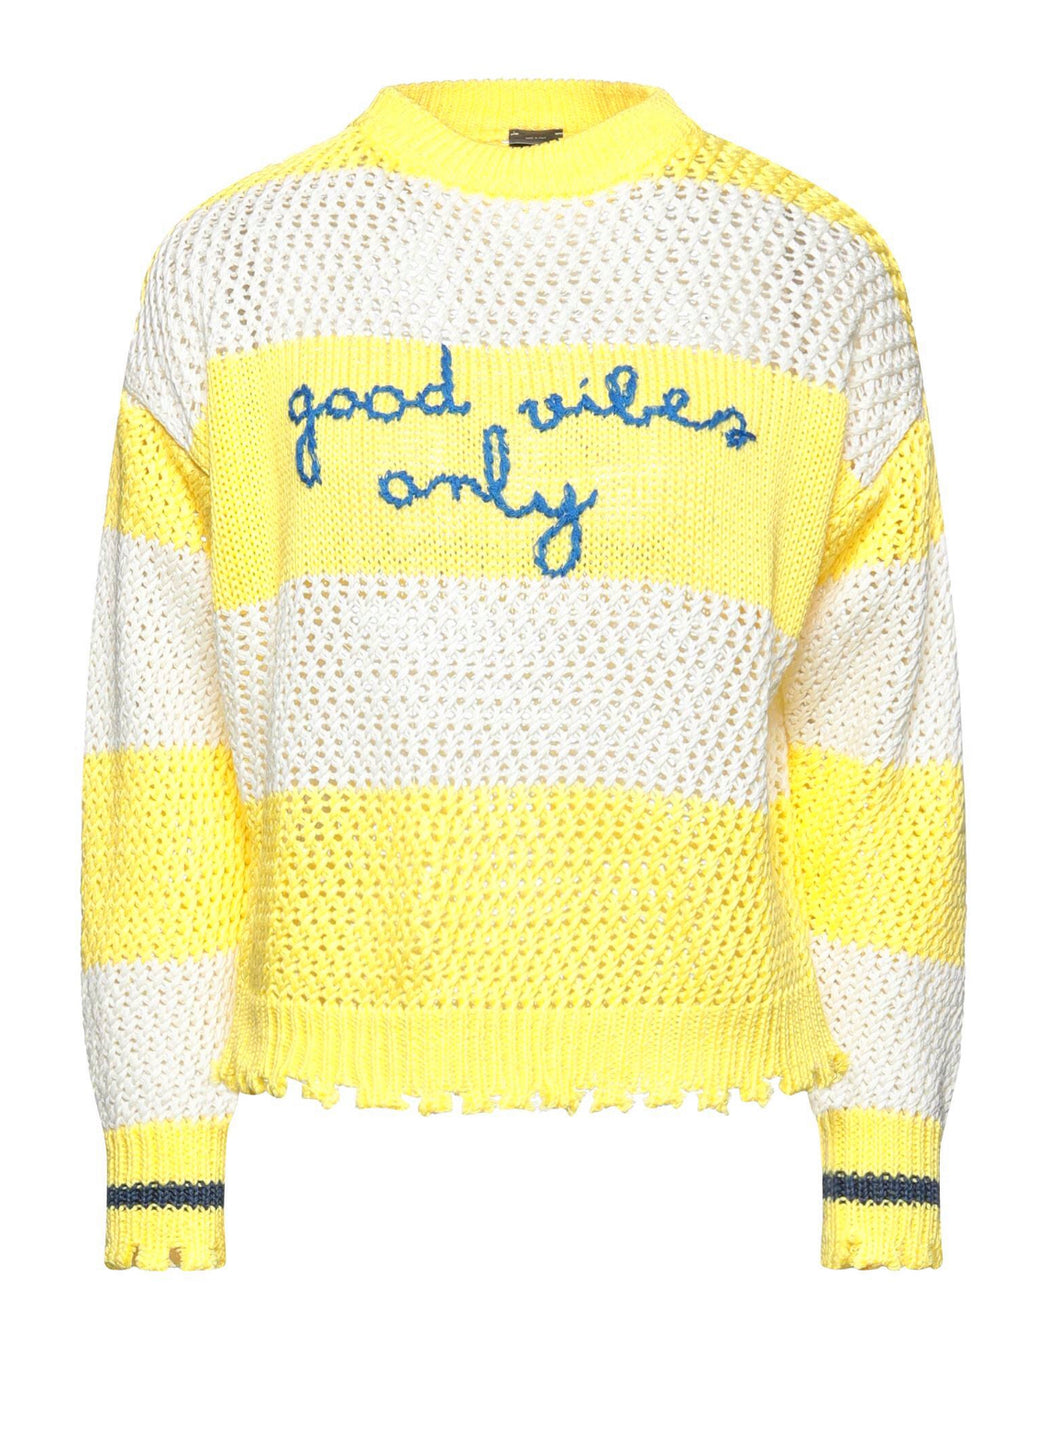 Good Vibes Sweater